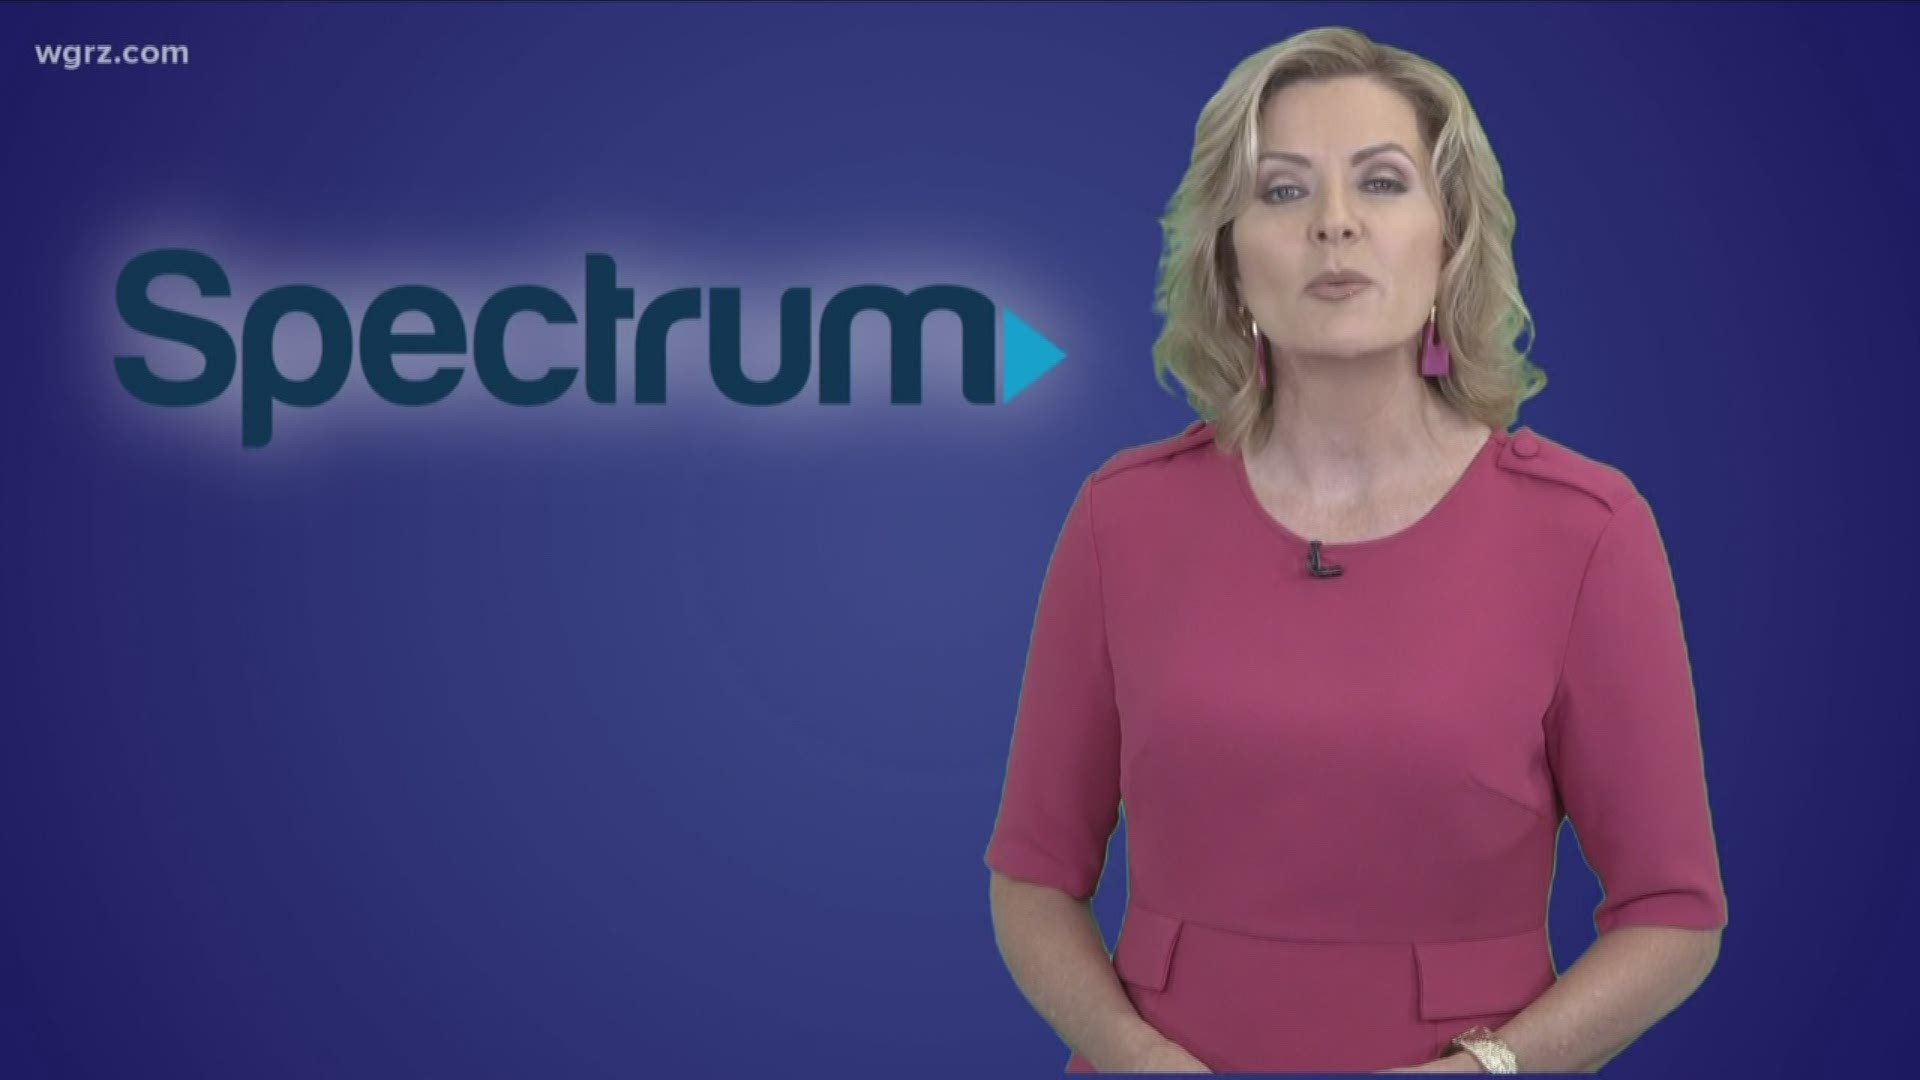 spectrum bill pay